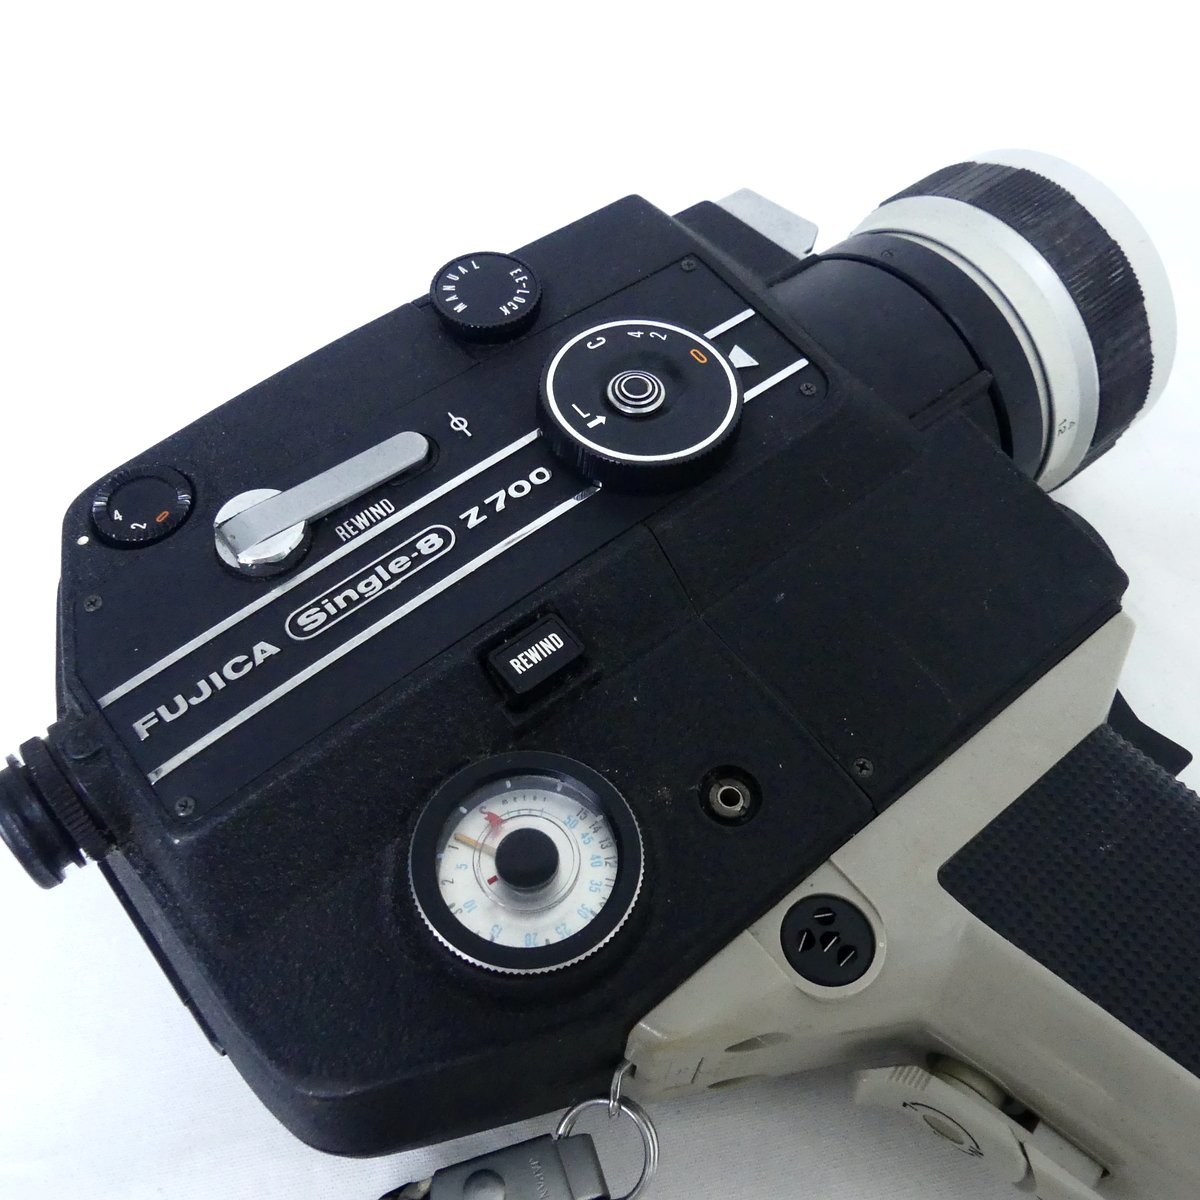  Fuji film FUJICA Fuji kaSingle-8 single eitoZ700 F1.8 8-56mm 8 millimeter camera present condition goods USED /2401C